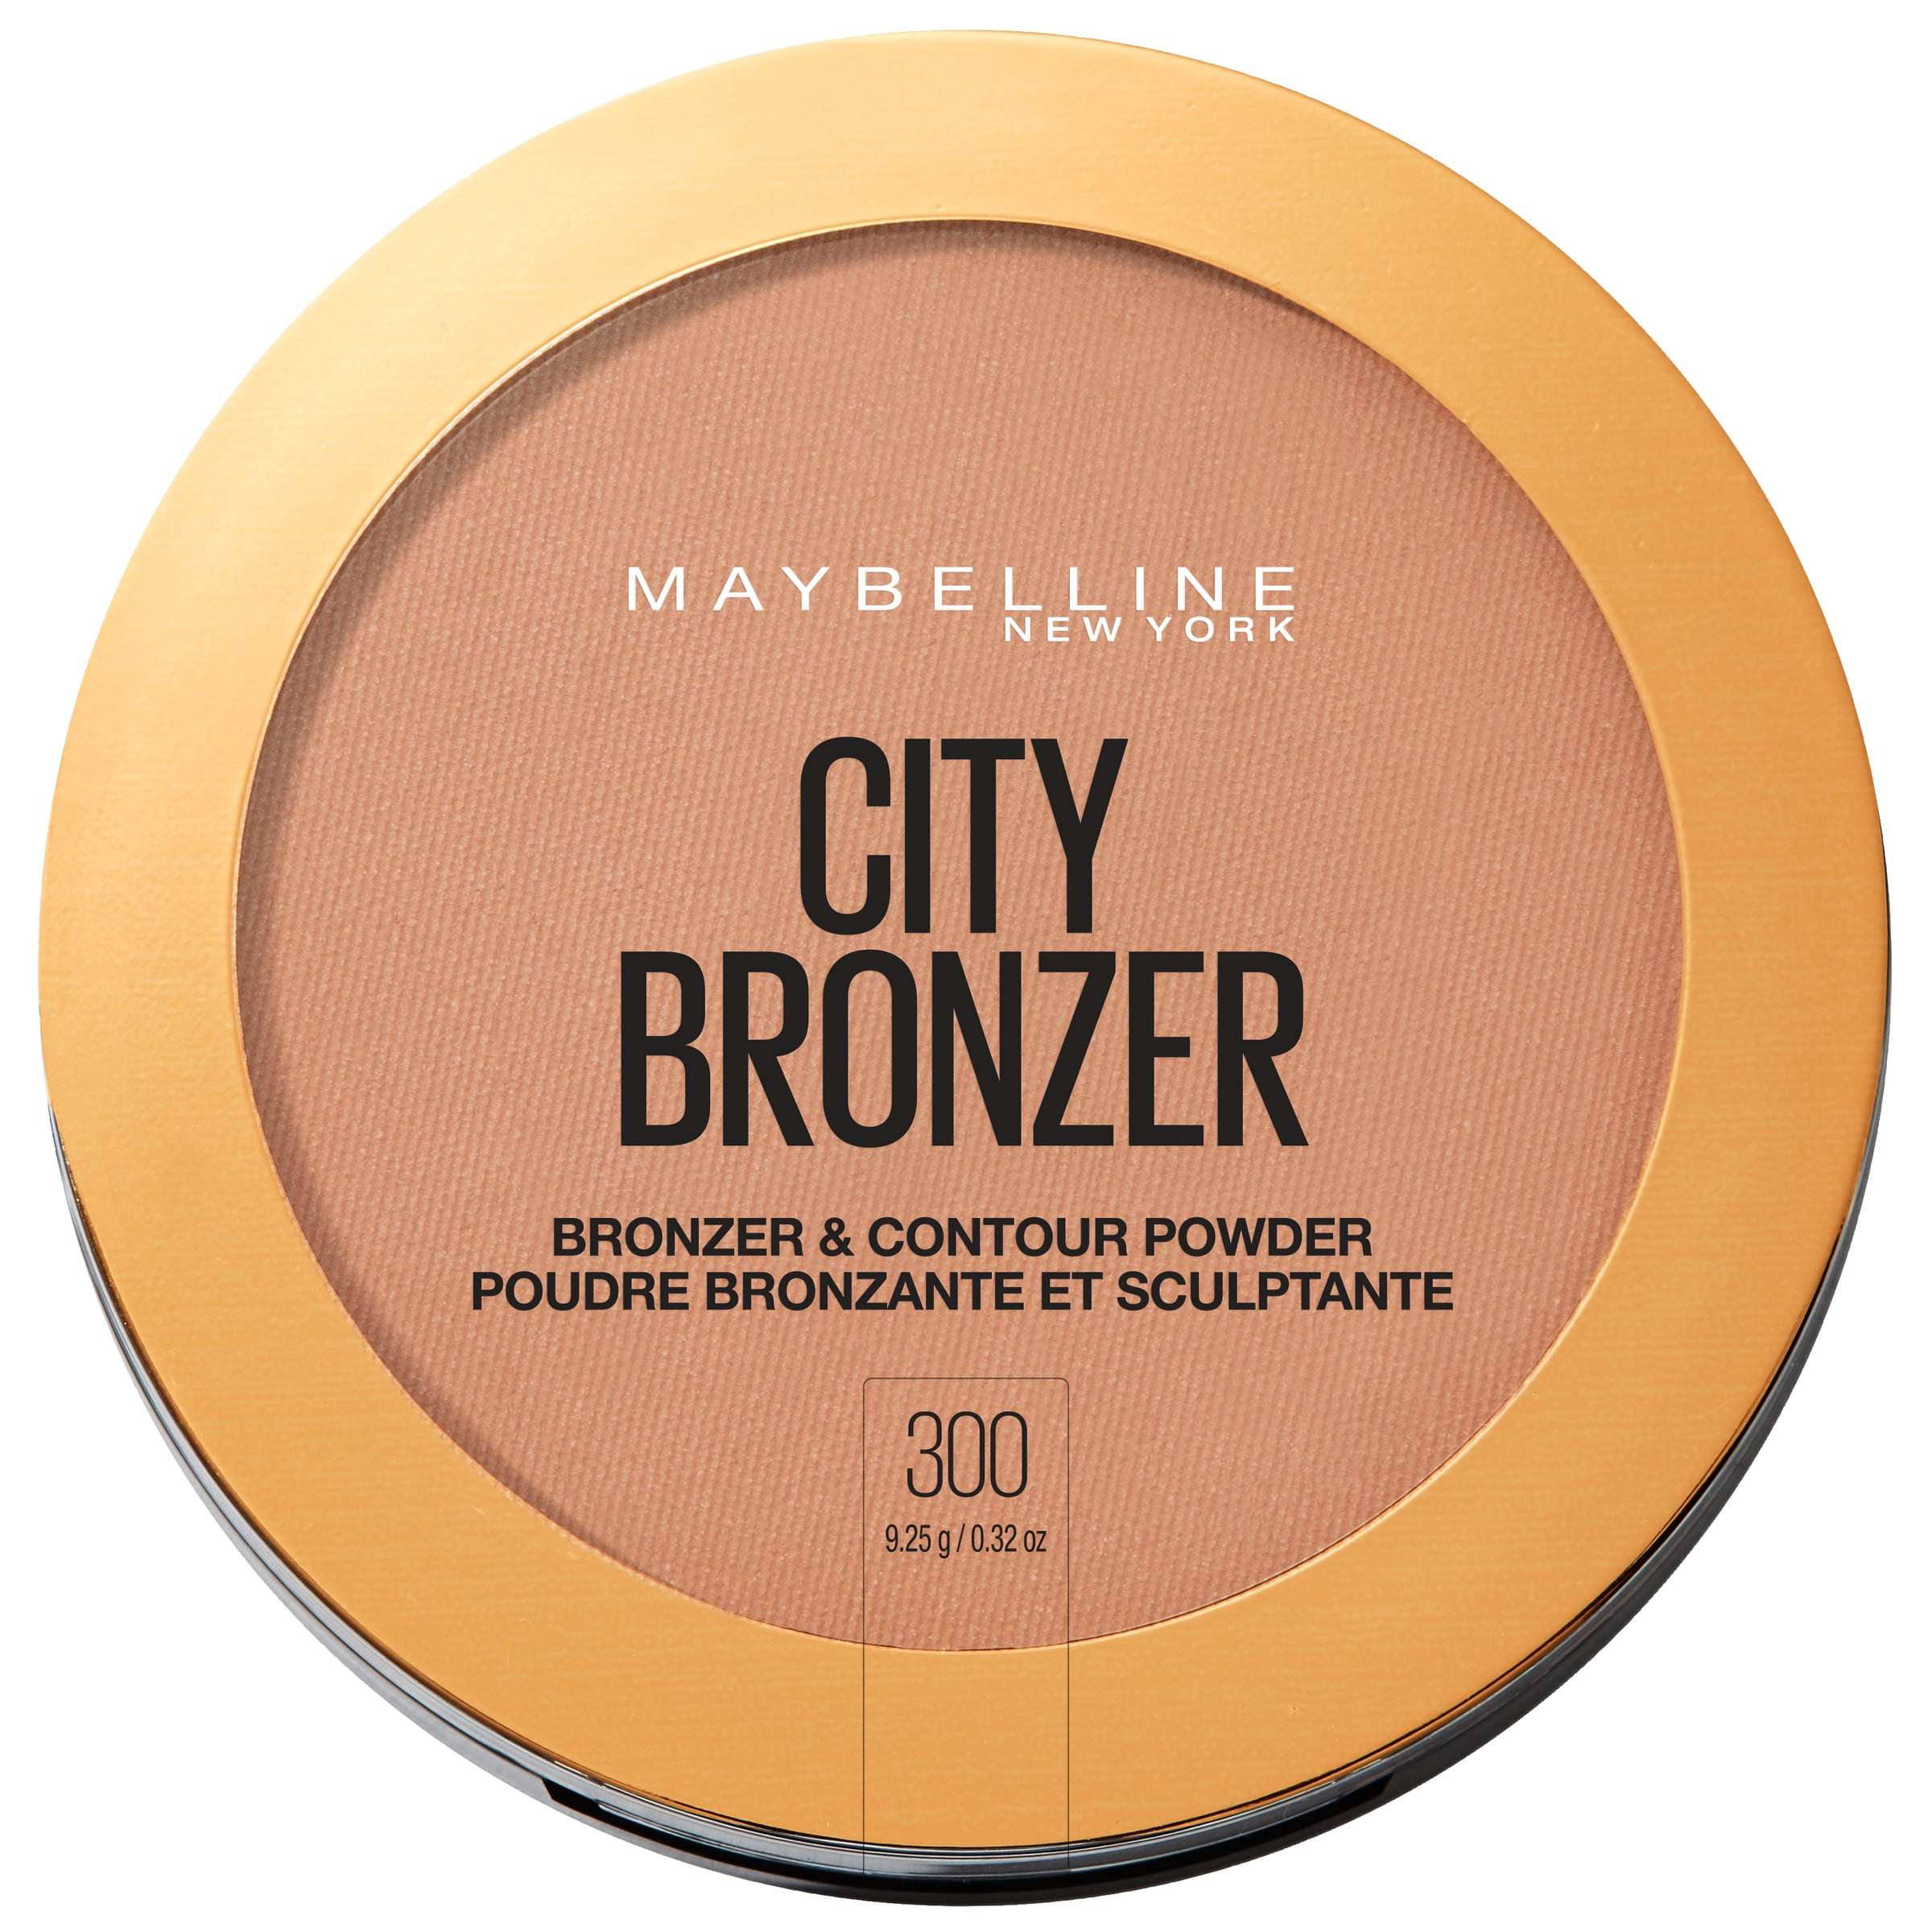 Maybelline City Bronzer Contour Powder Makeup, 300, 0.32 oz